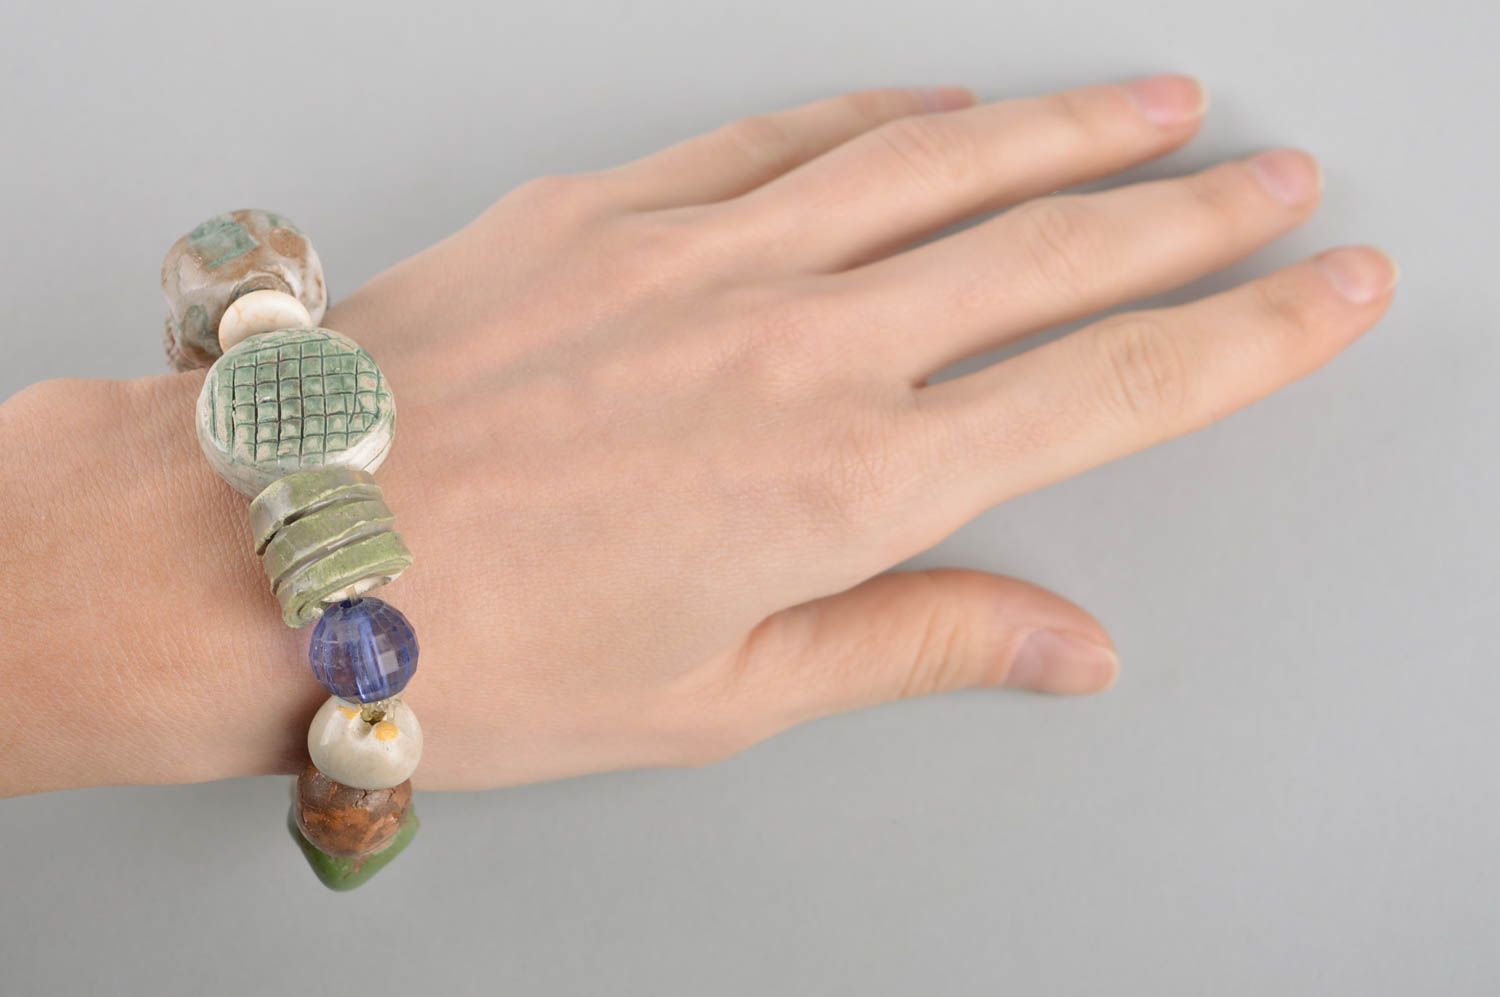 Beautiful handmade ceramic bracelet fashion accessories pottery works ideas photo 5